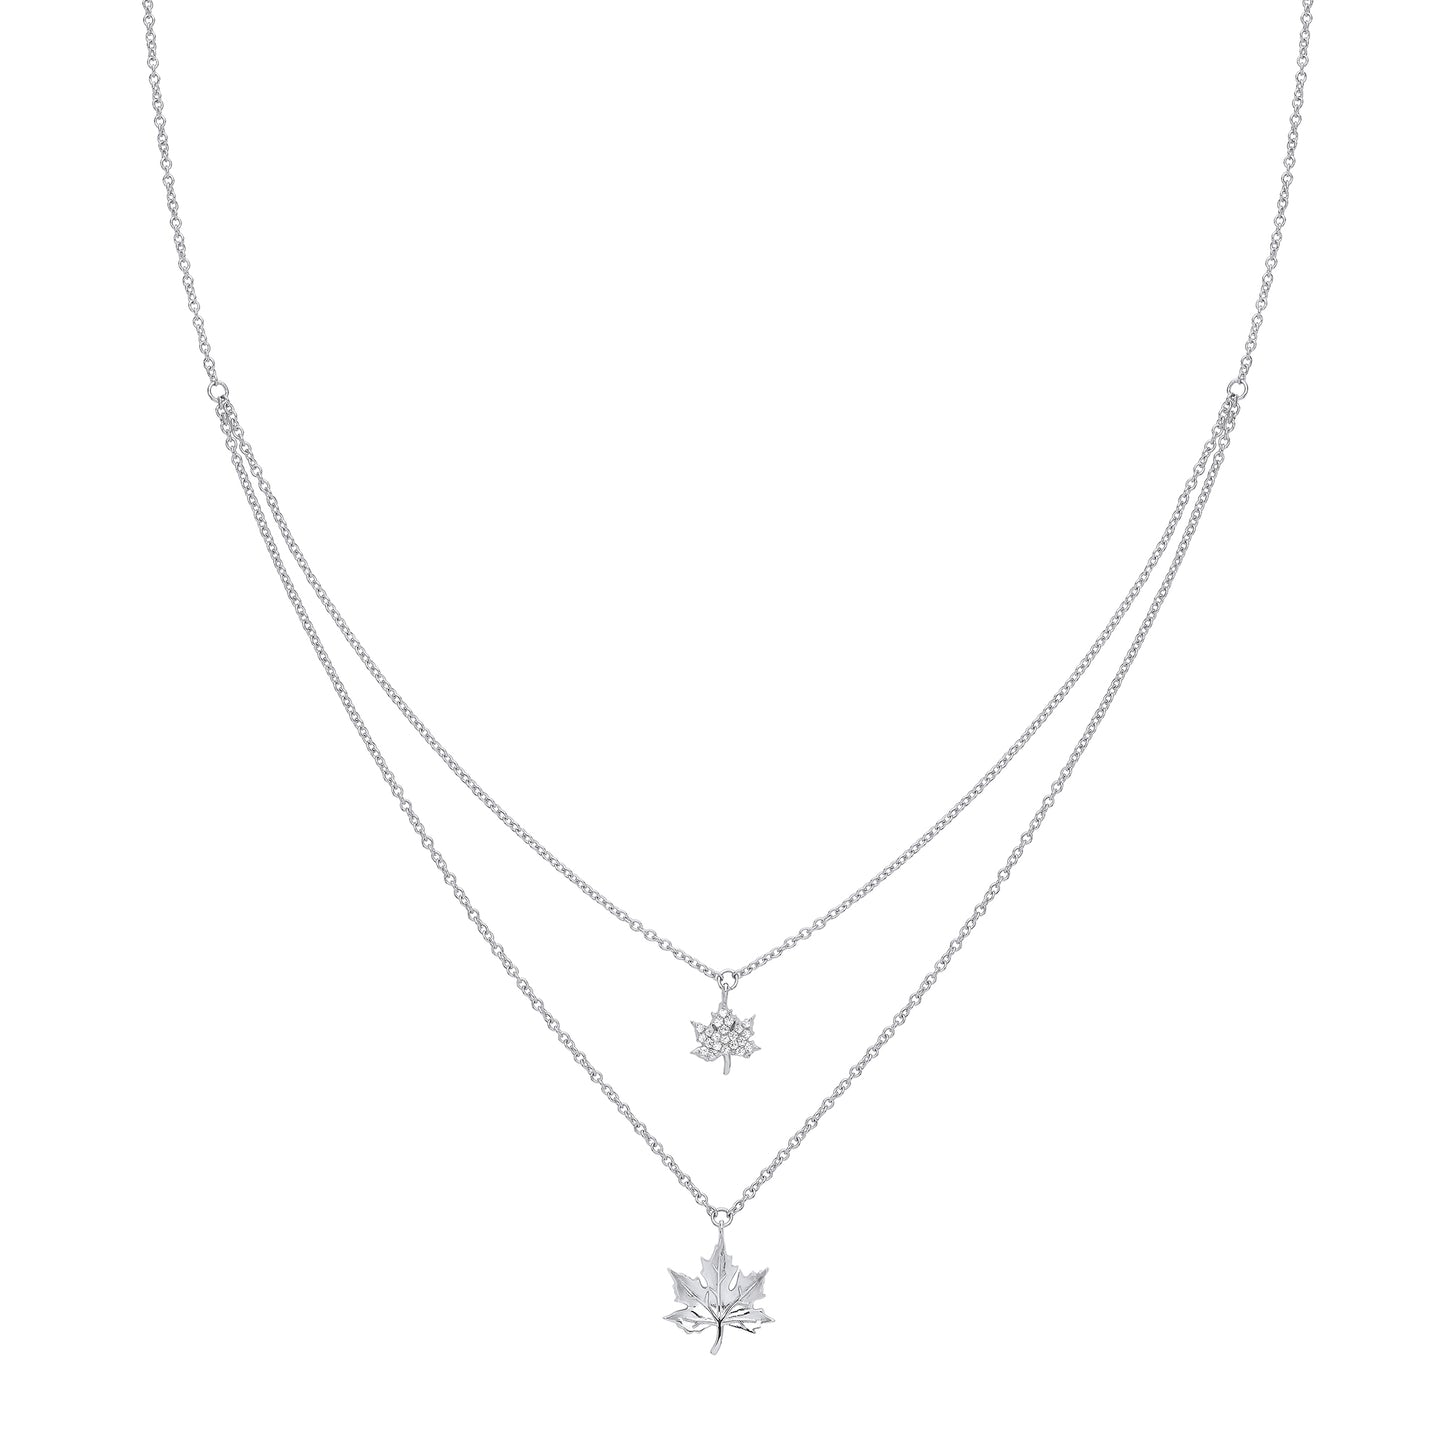 Silver  CZ Canada Maple Leaf Charm Necklace 16-18 inch - GVK307